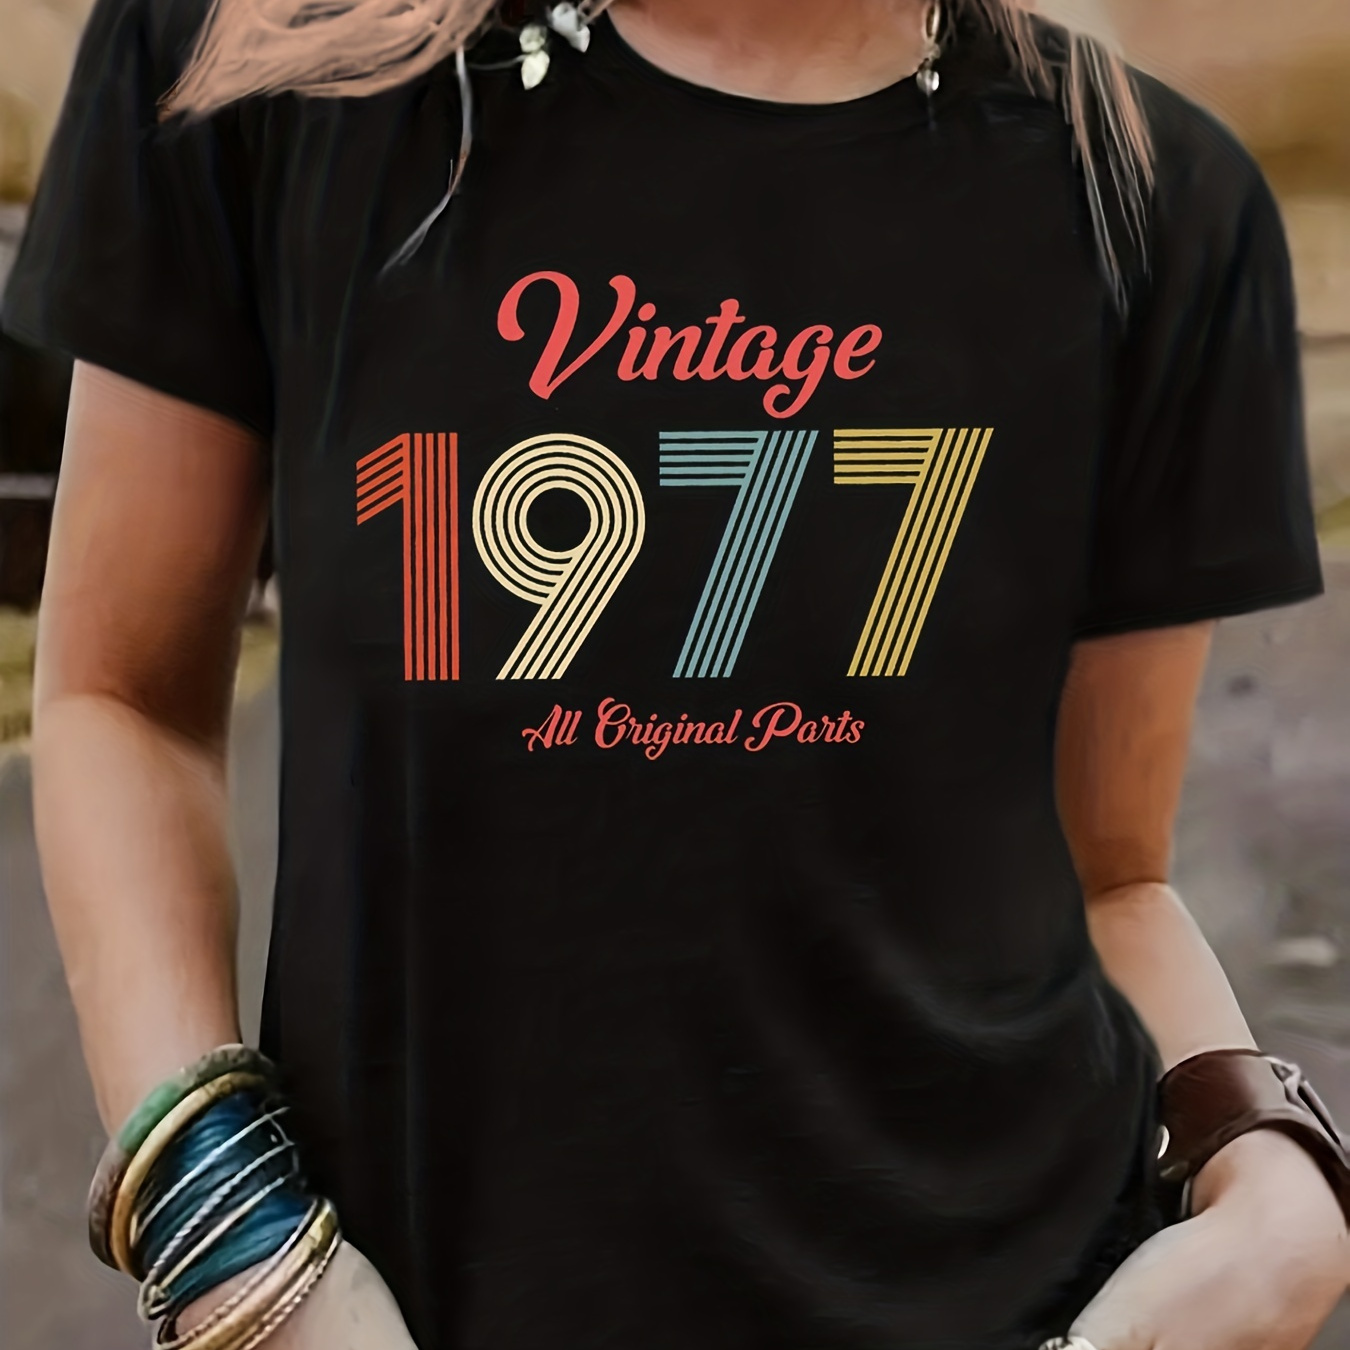 

Vintage 1977 Print T-shirt, Casual Crew Neck Short Sleeve T-shirt, Women's Clothing